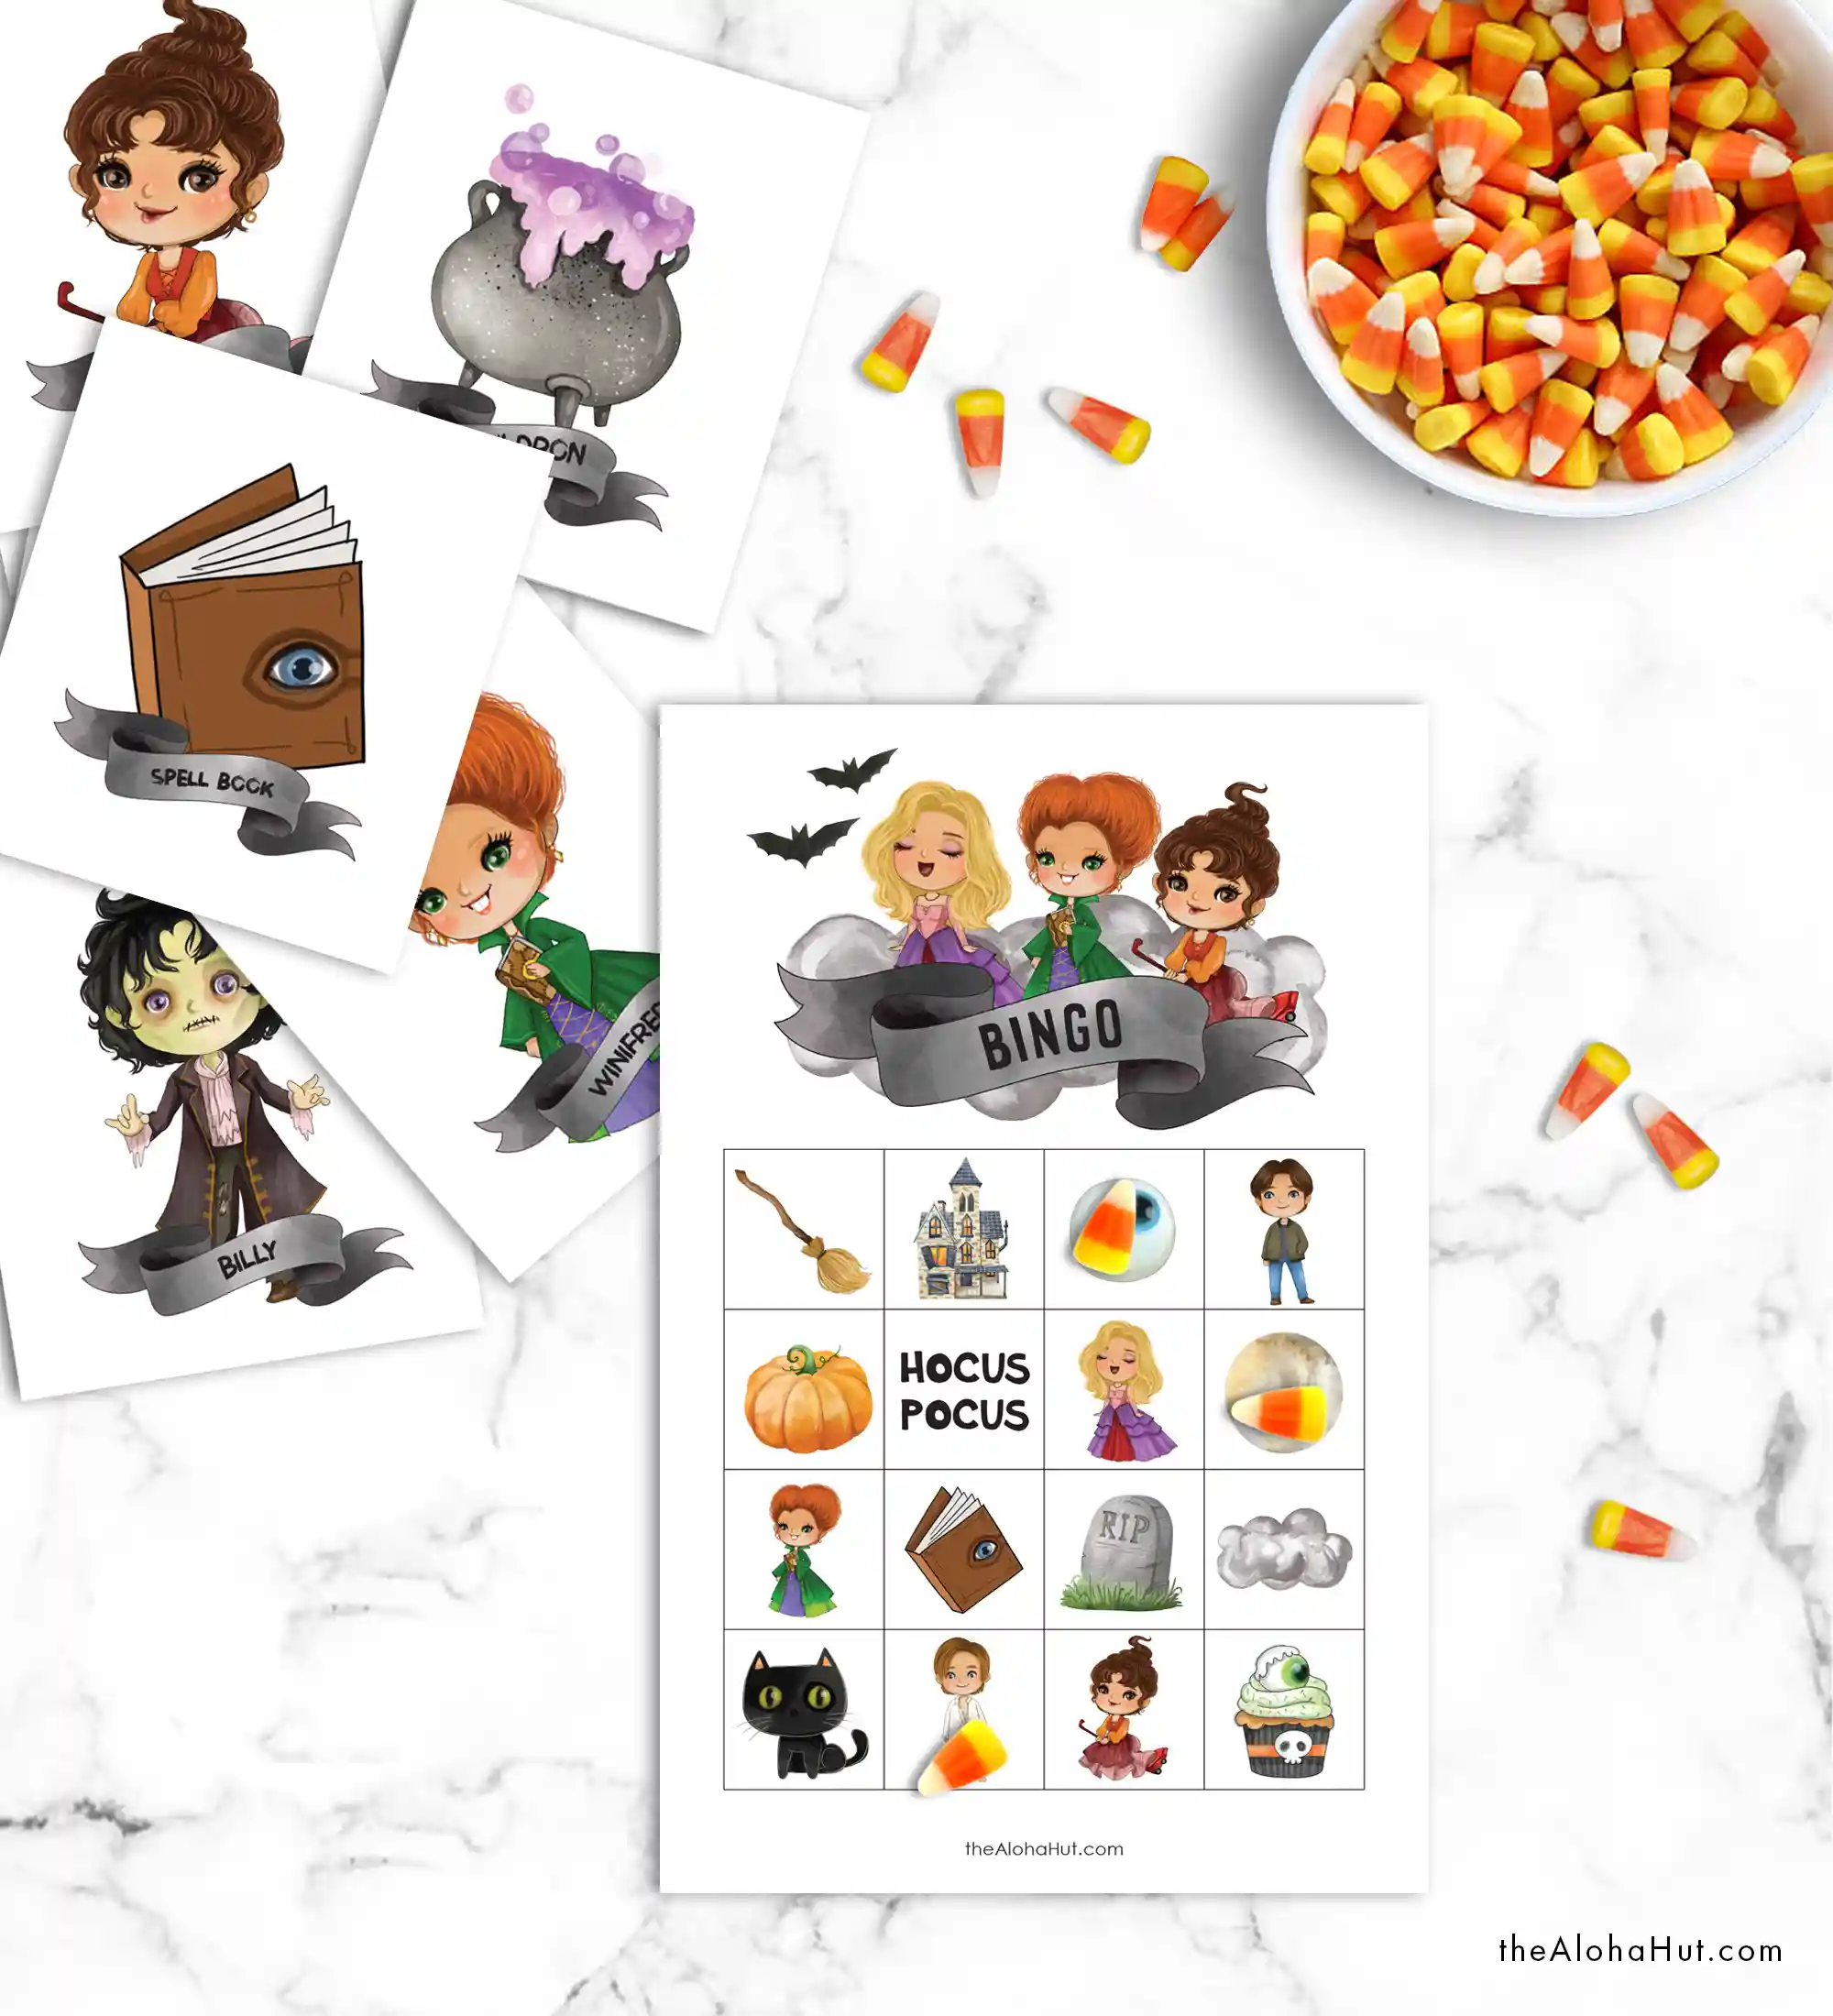 Hocus Pocus Halloween Party Ideas - Bingo Game